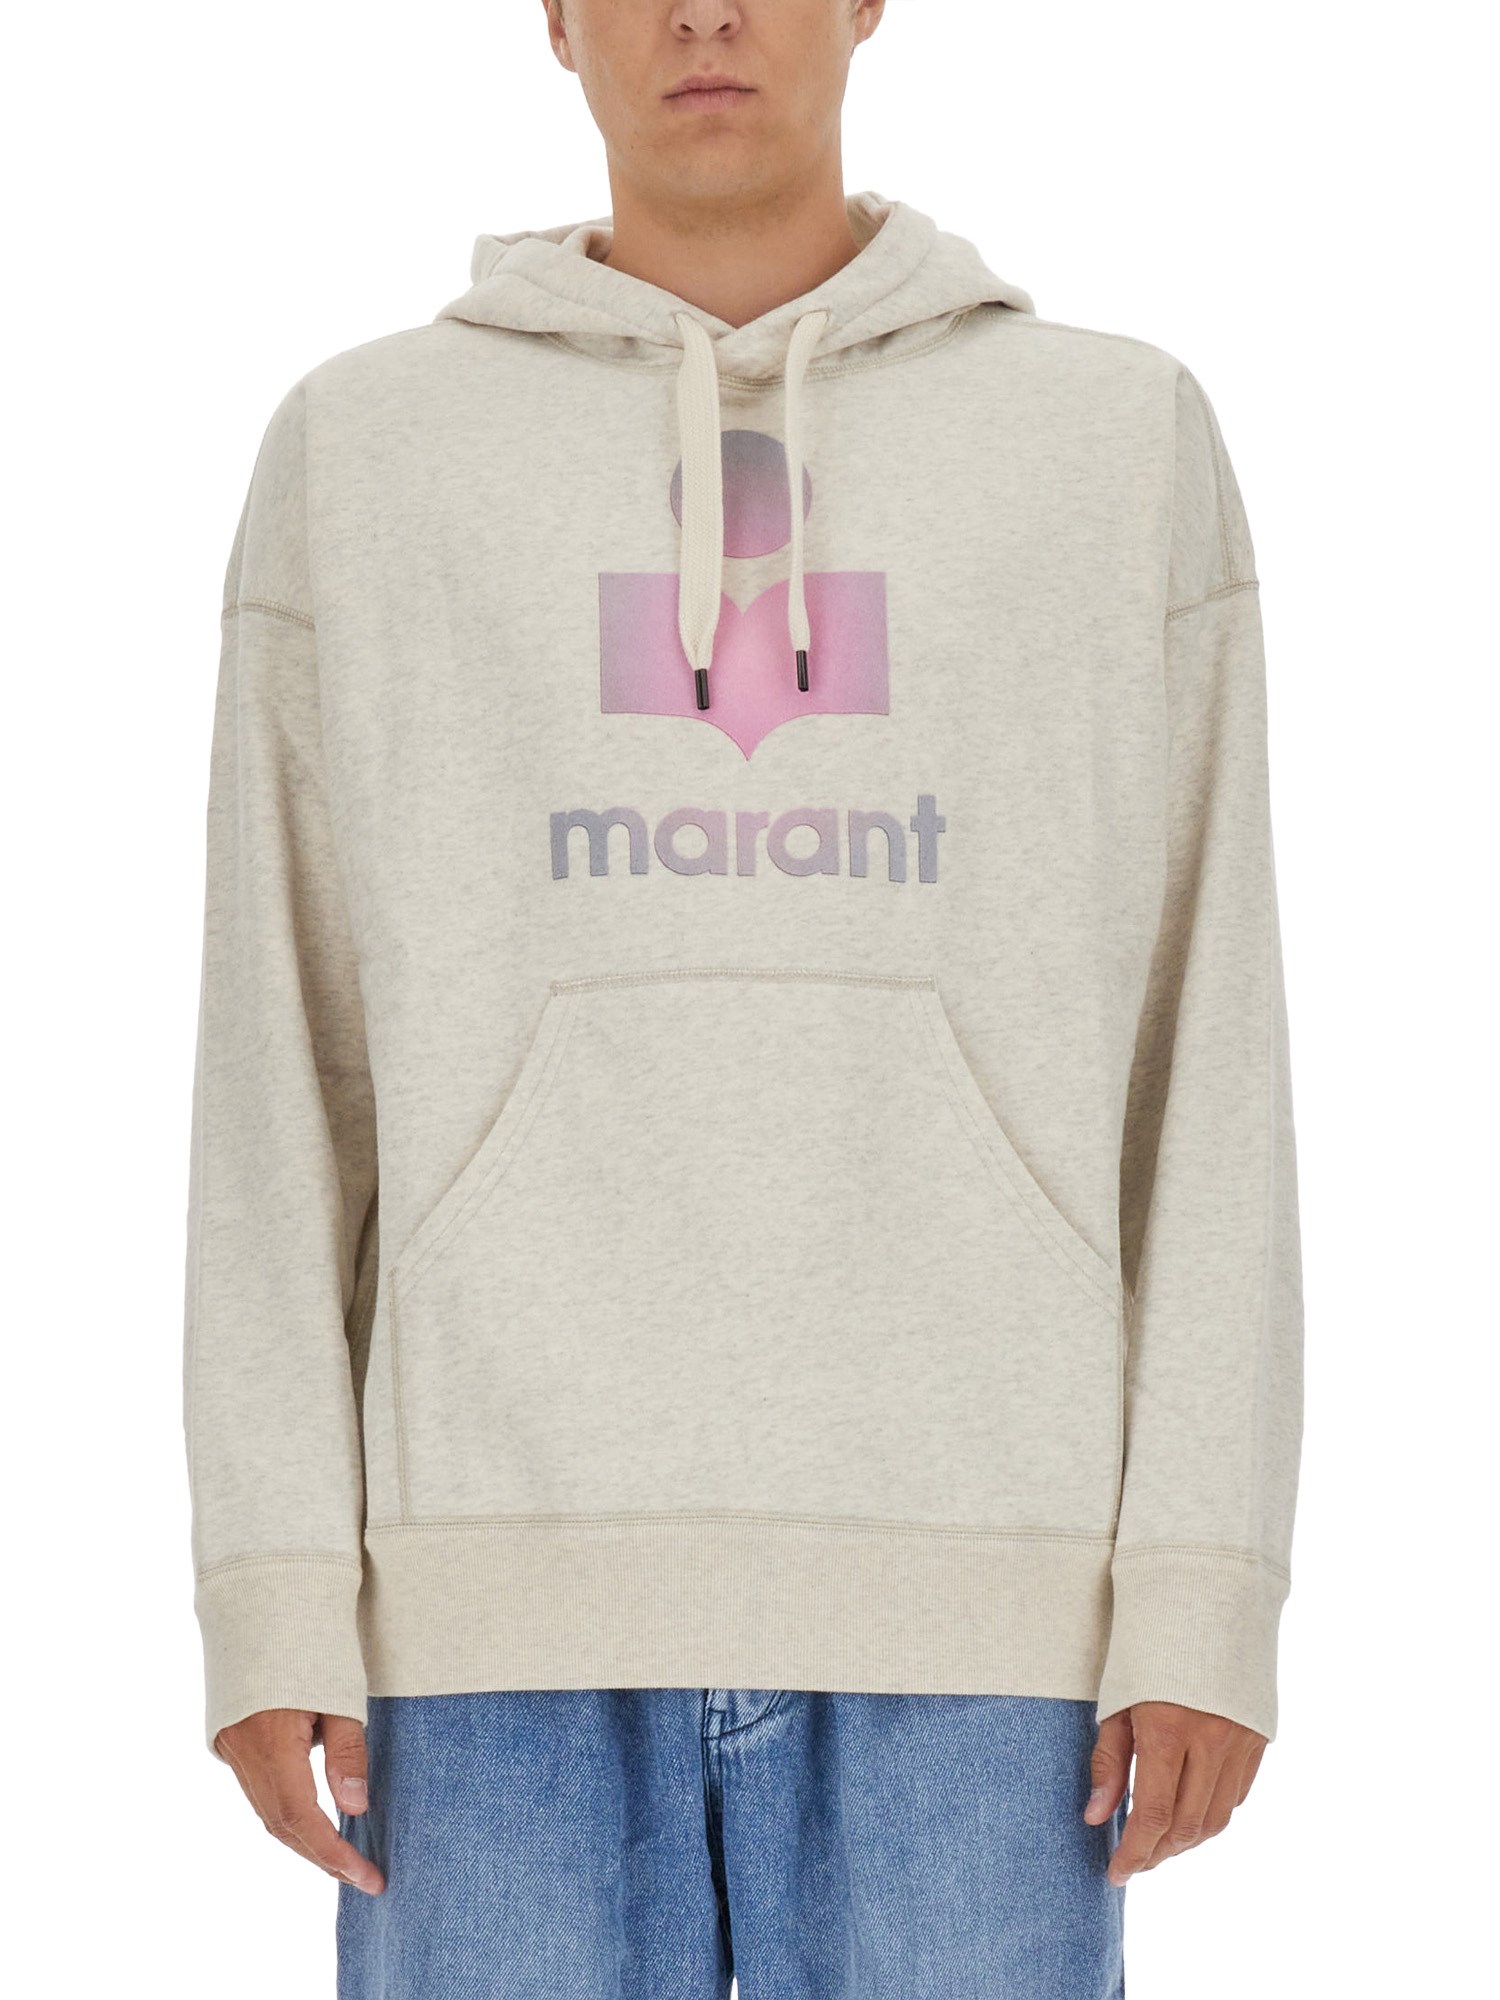 Marant Miley Sweatshirt In Powder